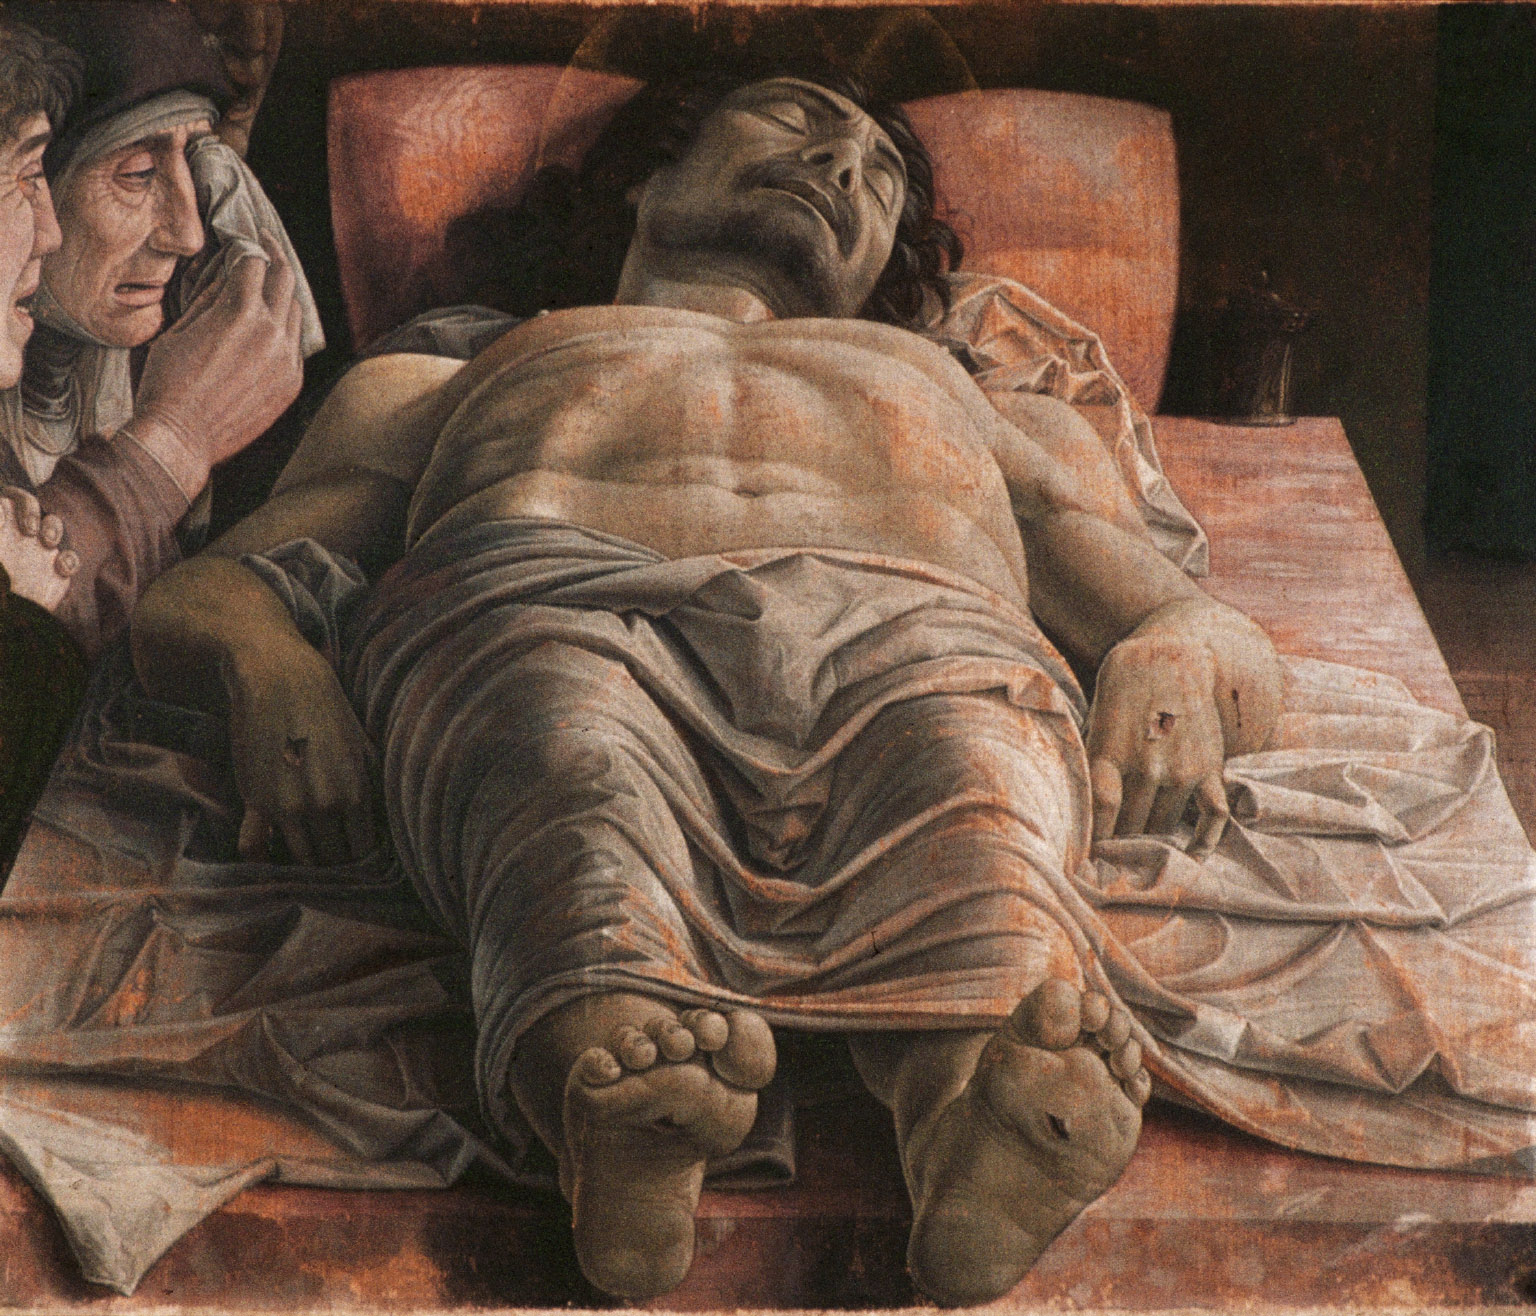 Image:Andrea Mantegna - The Dead Christ.jpg